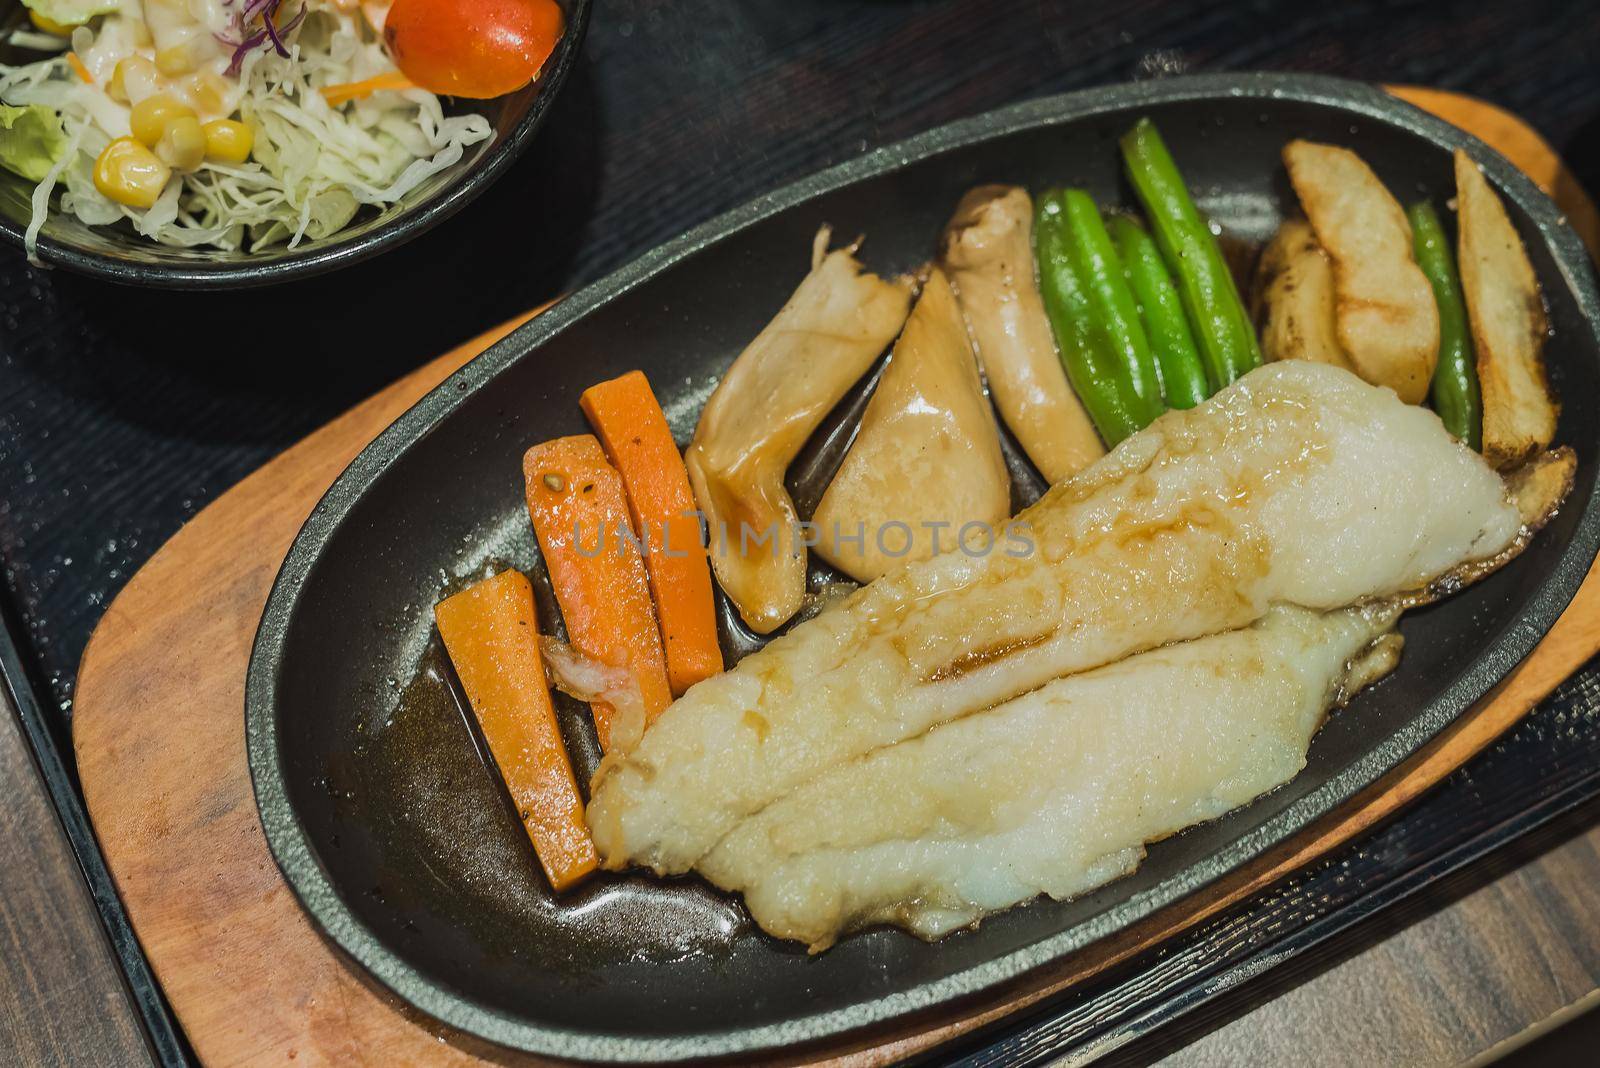 fish steak with vegetables by Wmpix